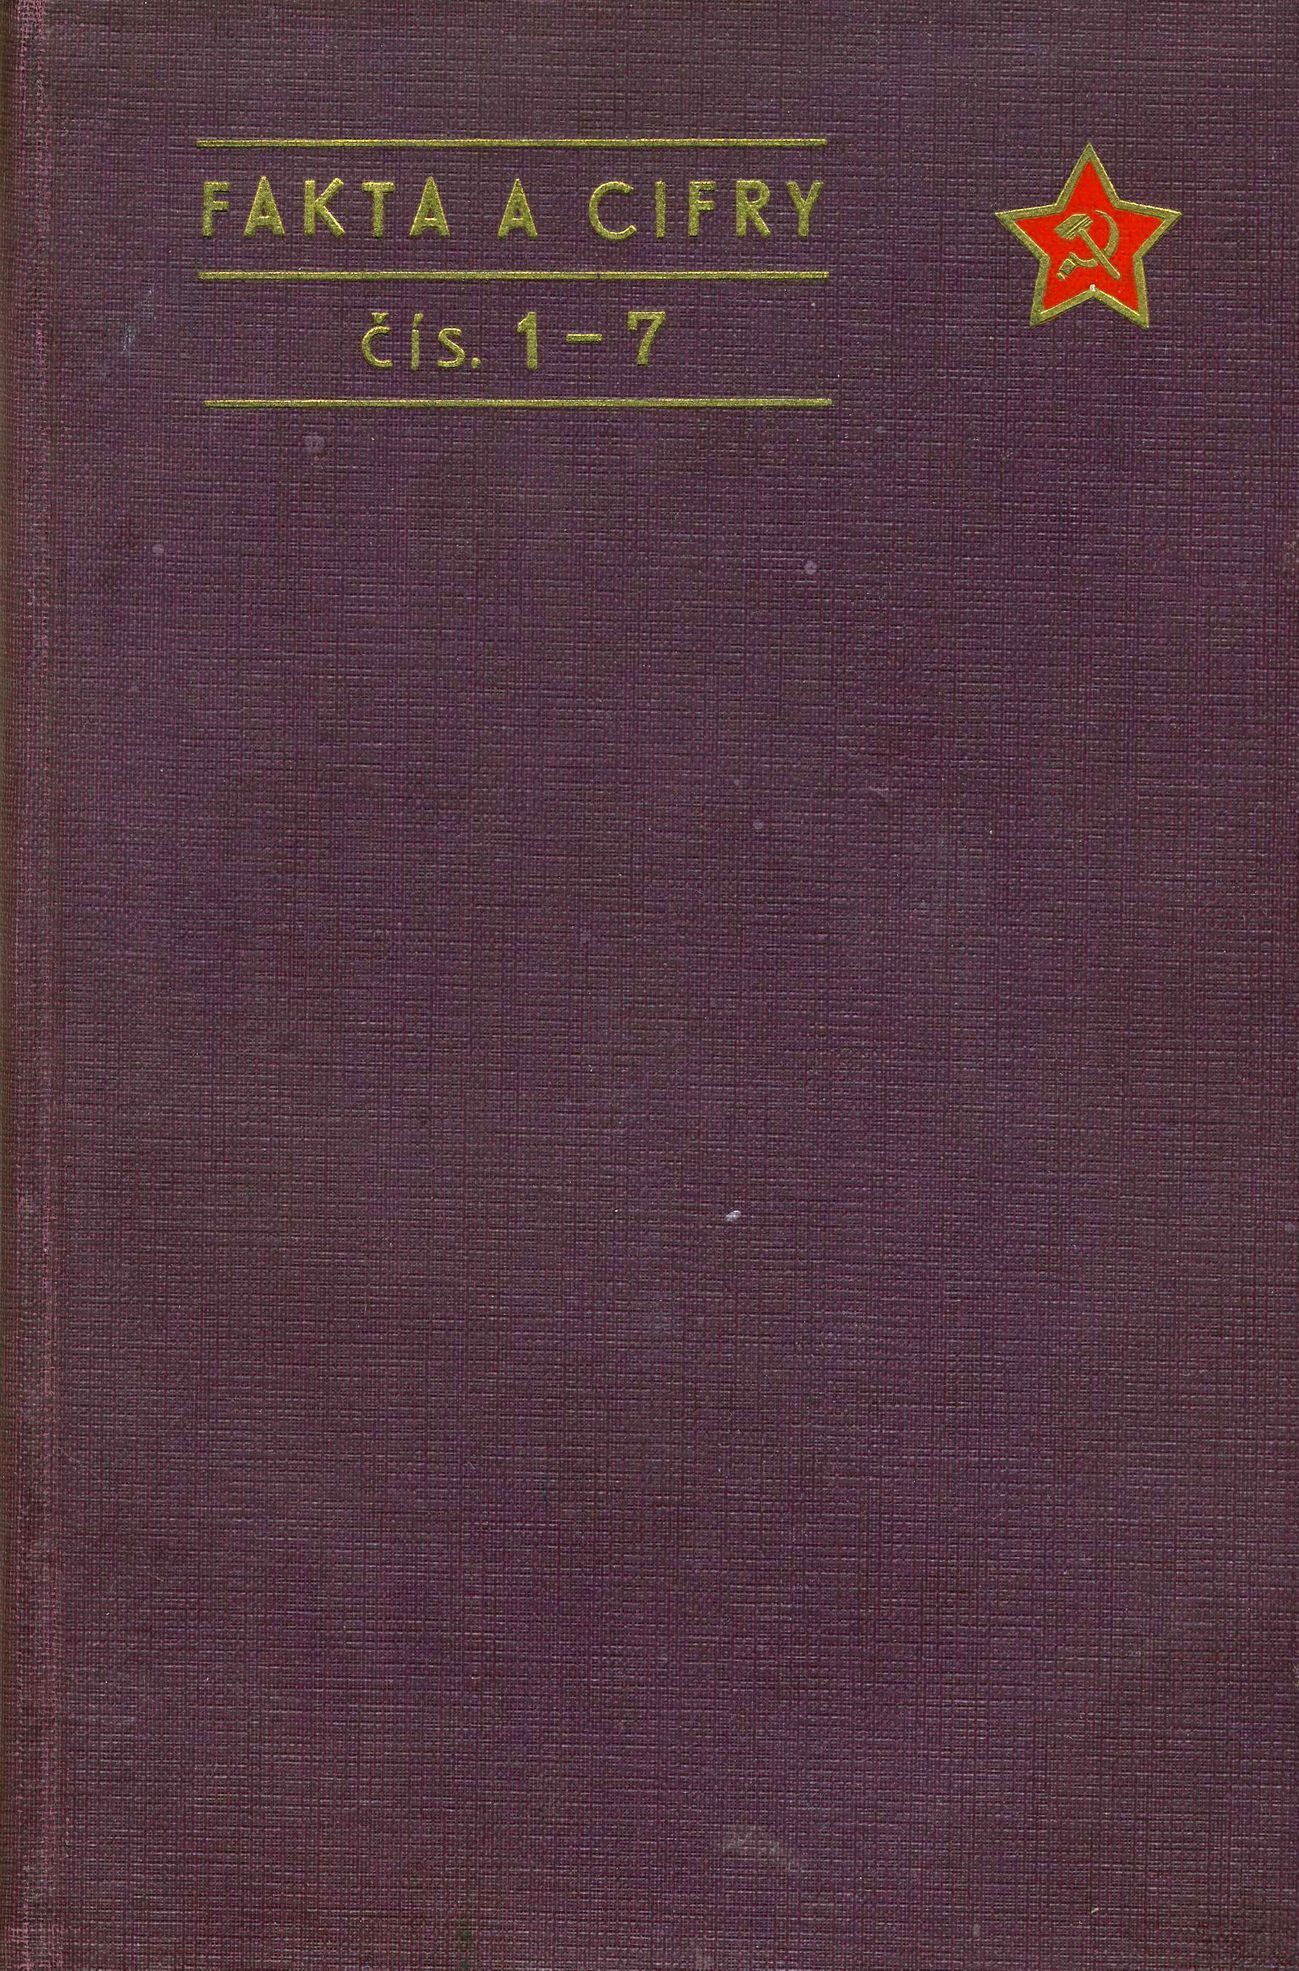 Publikace Fakta a Cifry z roku 1946